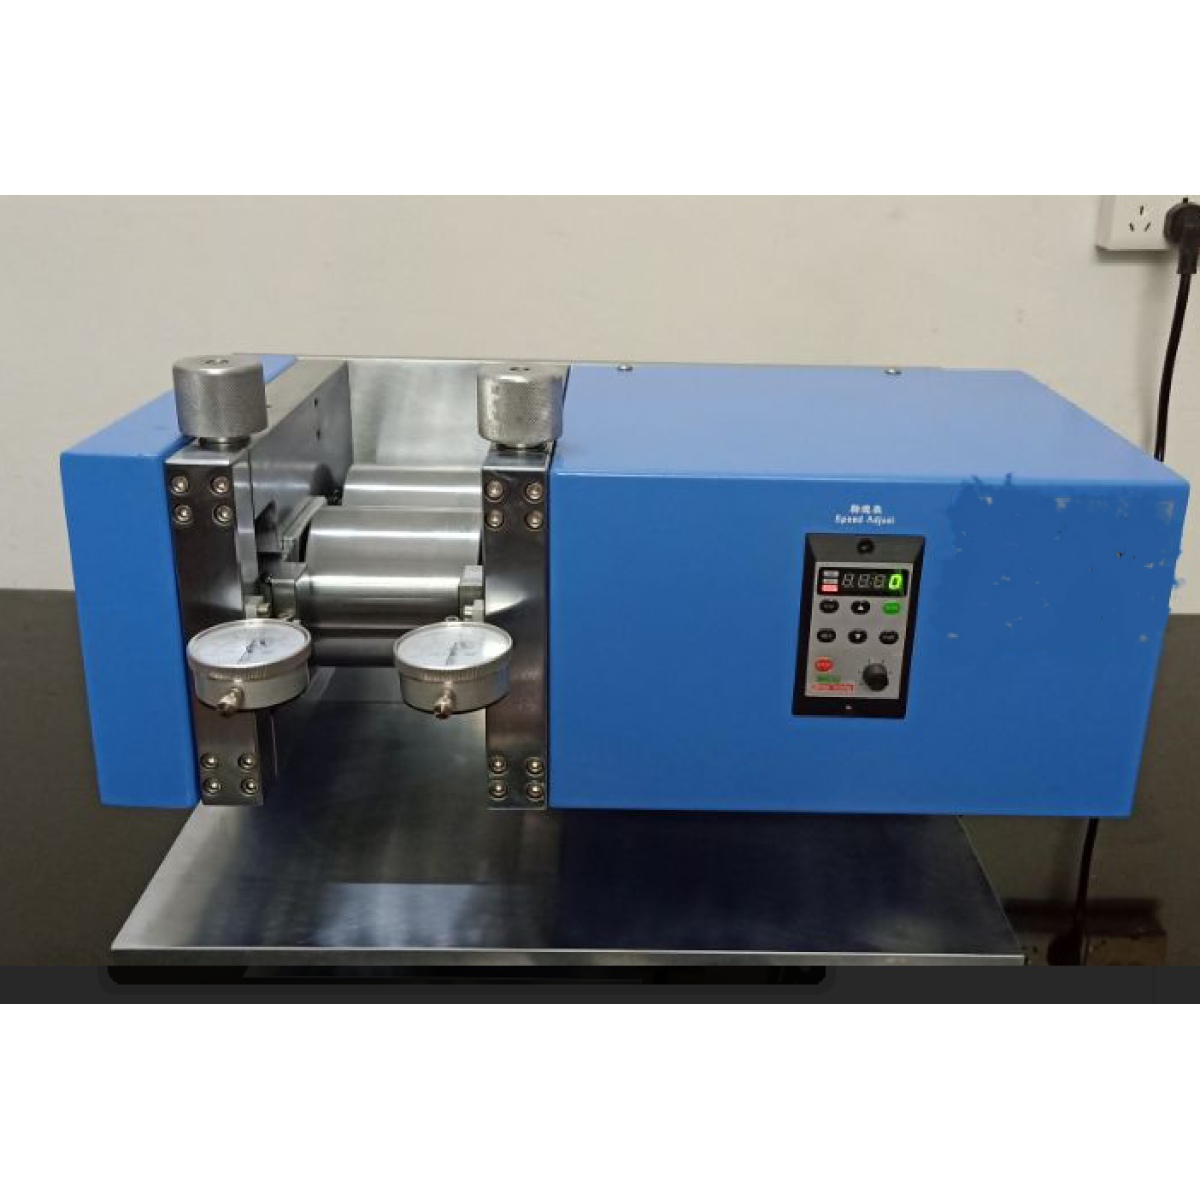 MD-GYJ-100D electric horizontal desktop heating roller press